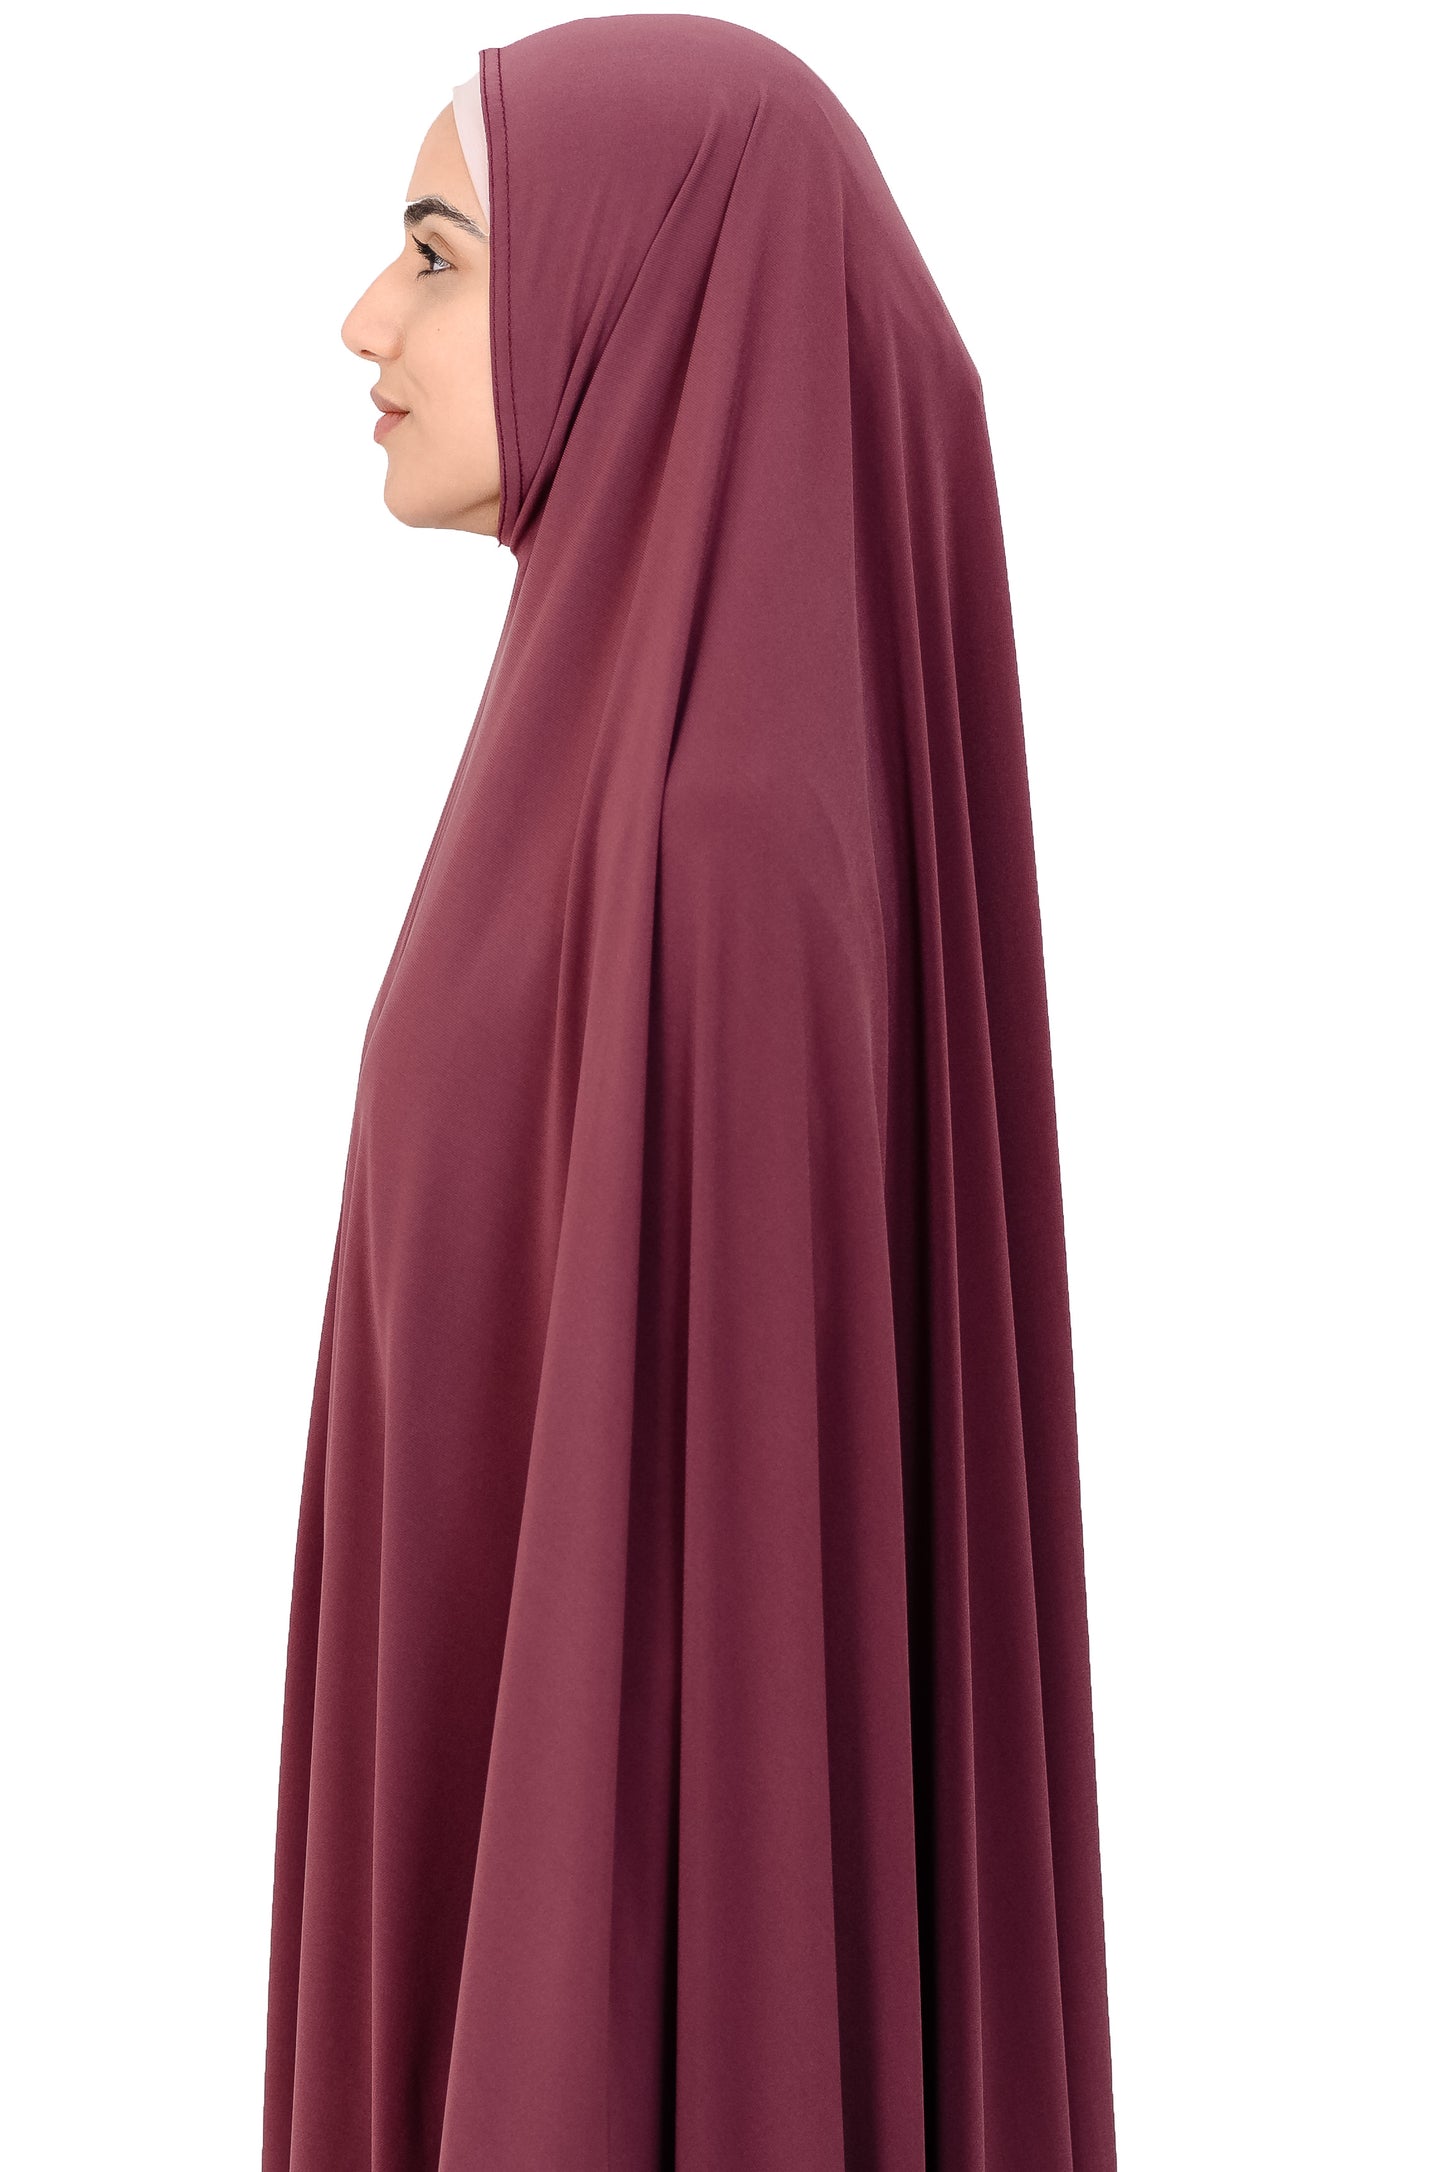 Long Sleeved Jelbab in Boysenberry